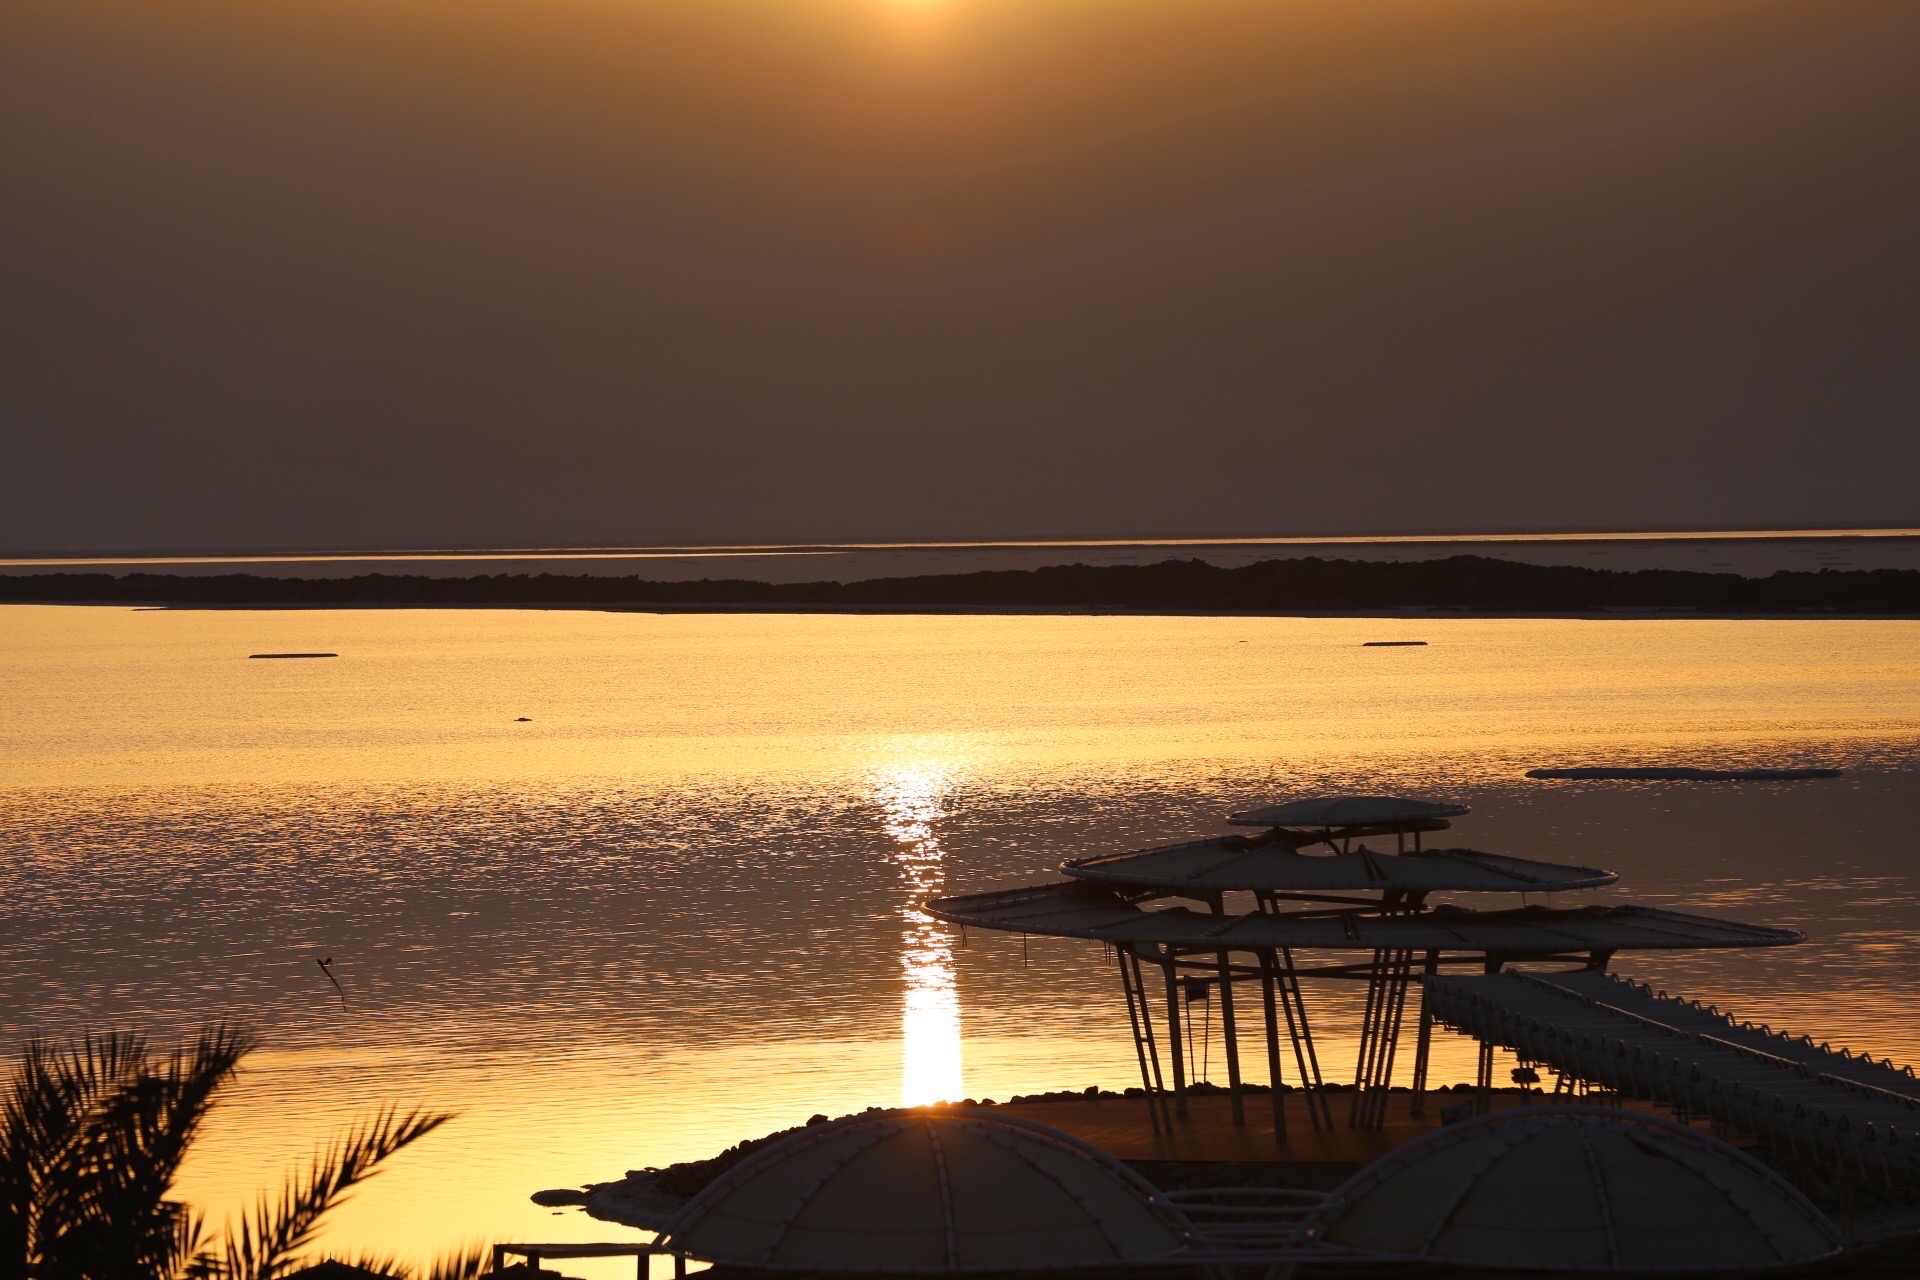 Dead Sea-死海 世界上最低的湖泊 湖面海拔-442米 形似一条双尾鱼 人在湖中 能漂浮在湖面